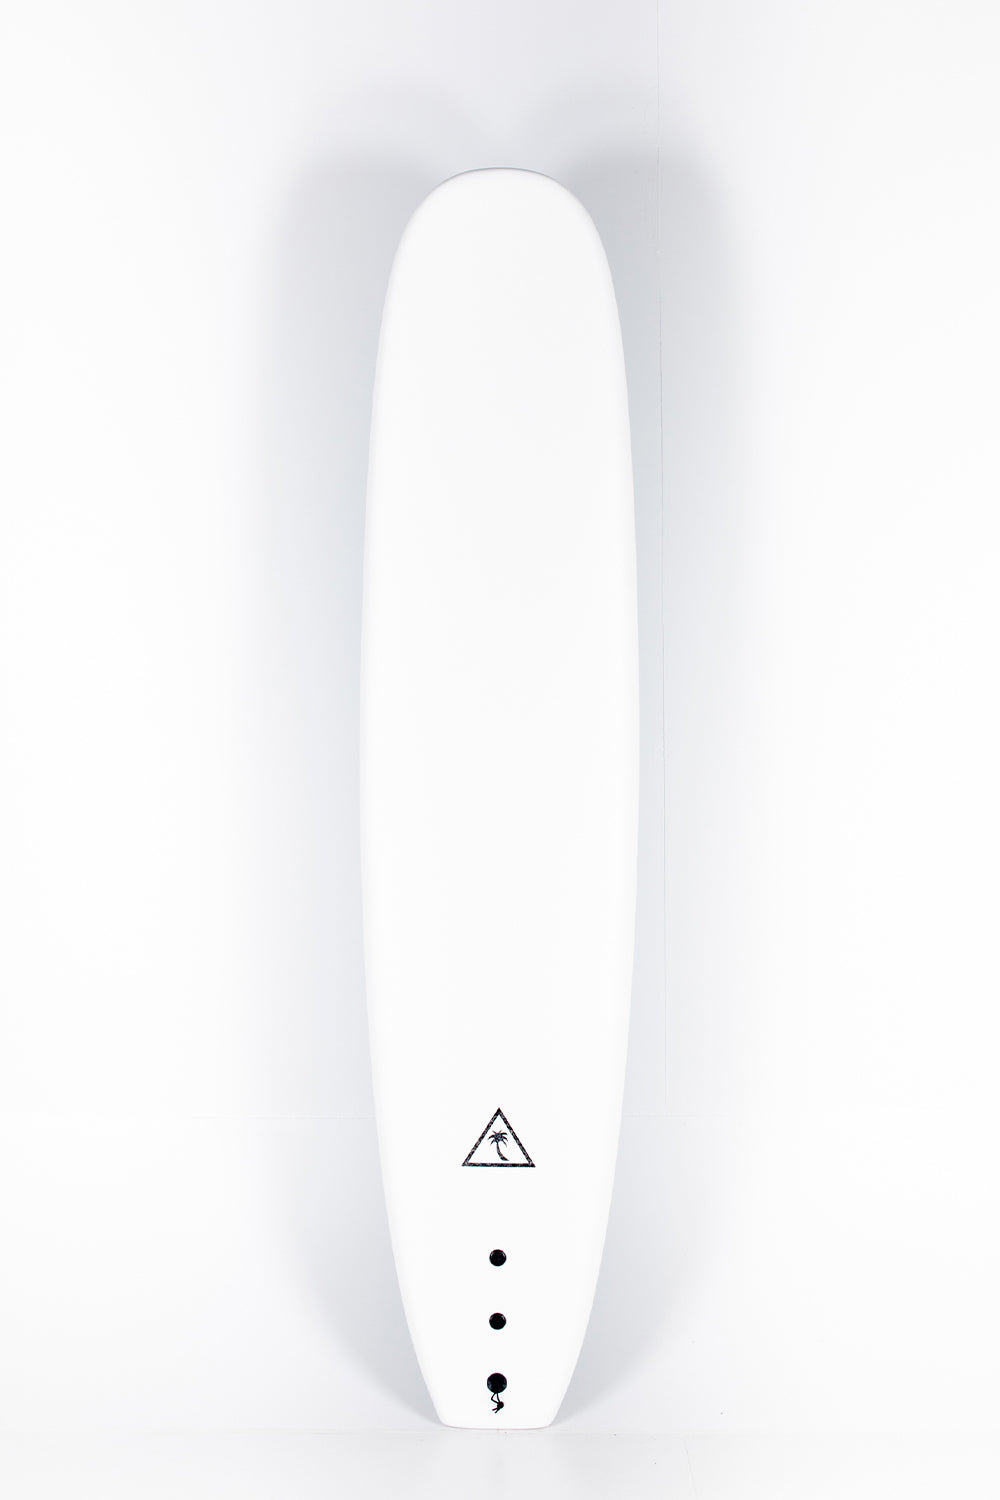 Pukas Surf Shop - Catch Surf - NOSERIDER SINGLE FIN White Light Blue - 8'6